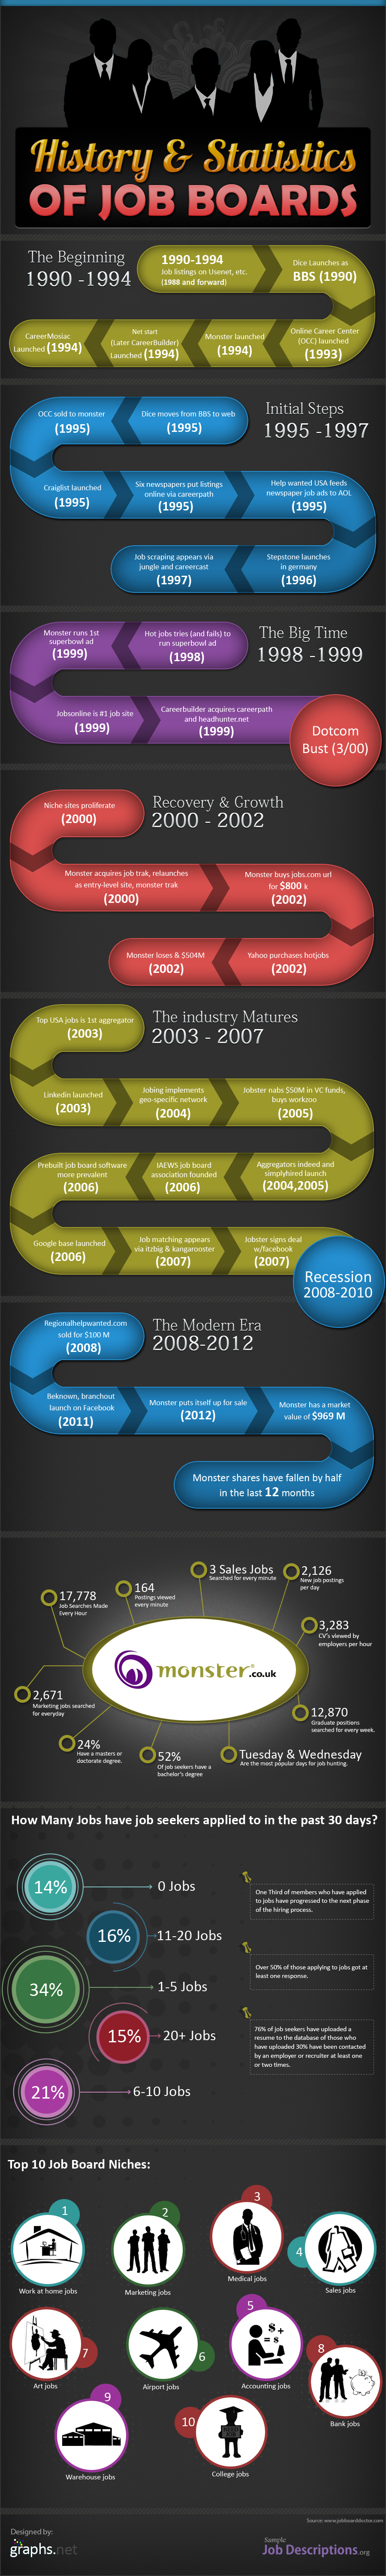 History statistics of job boards